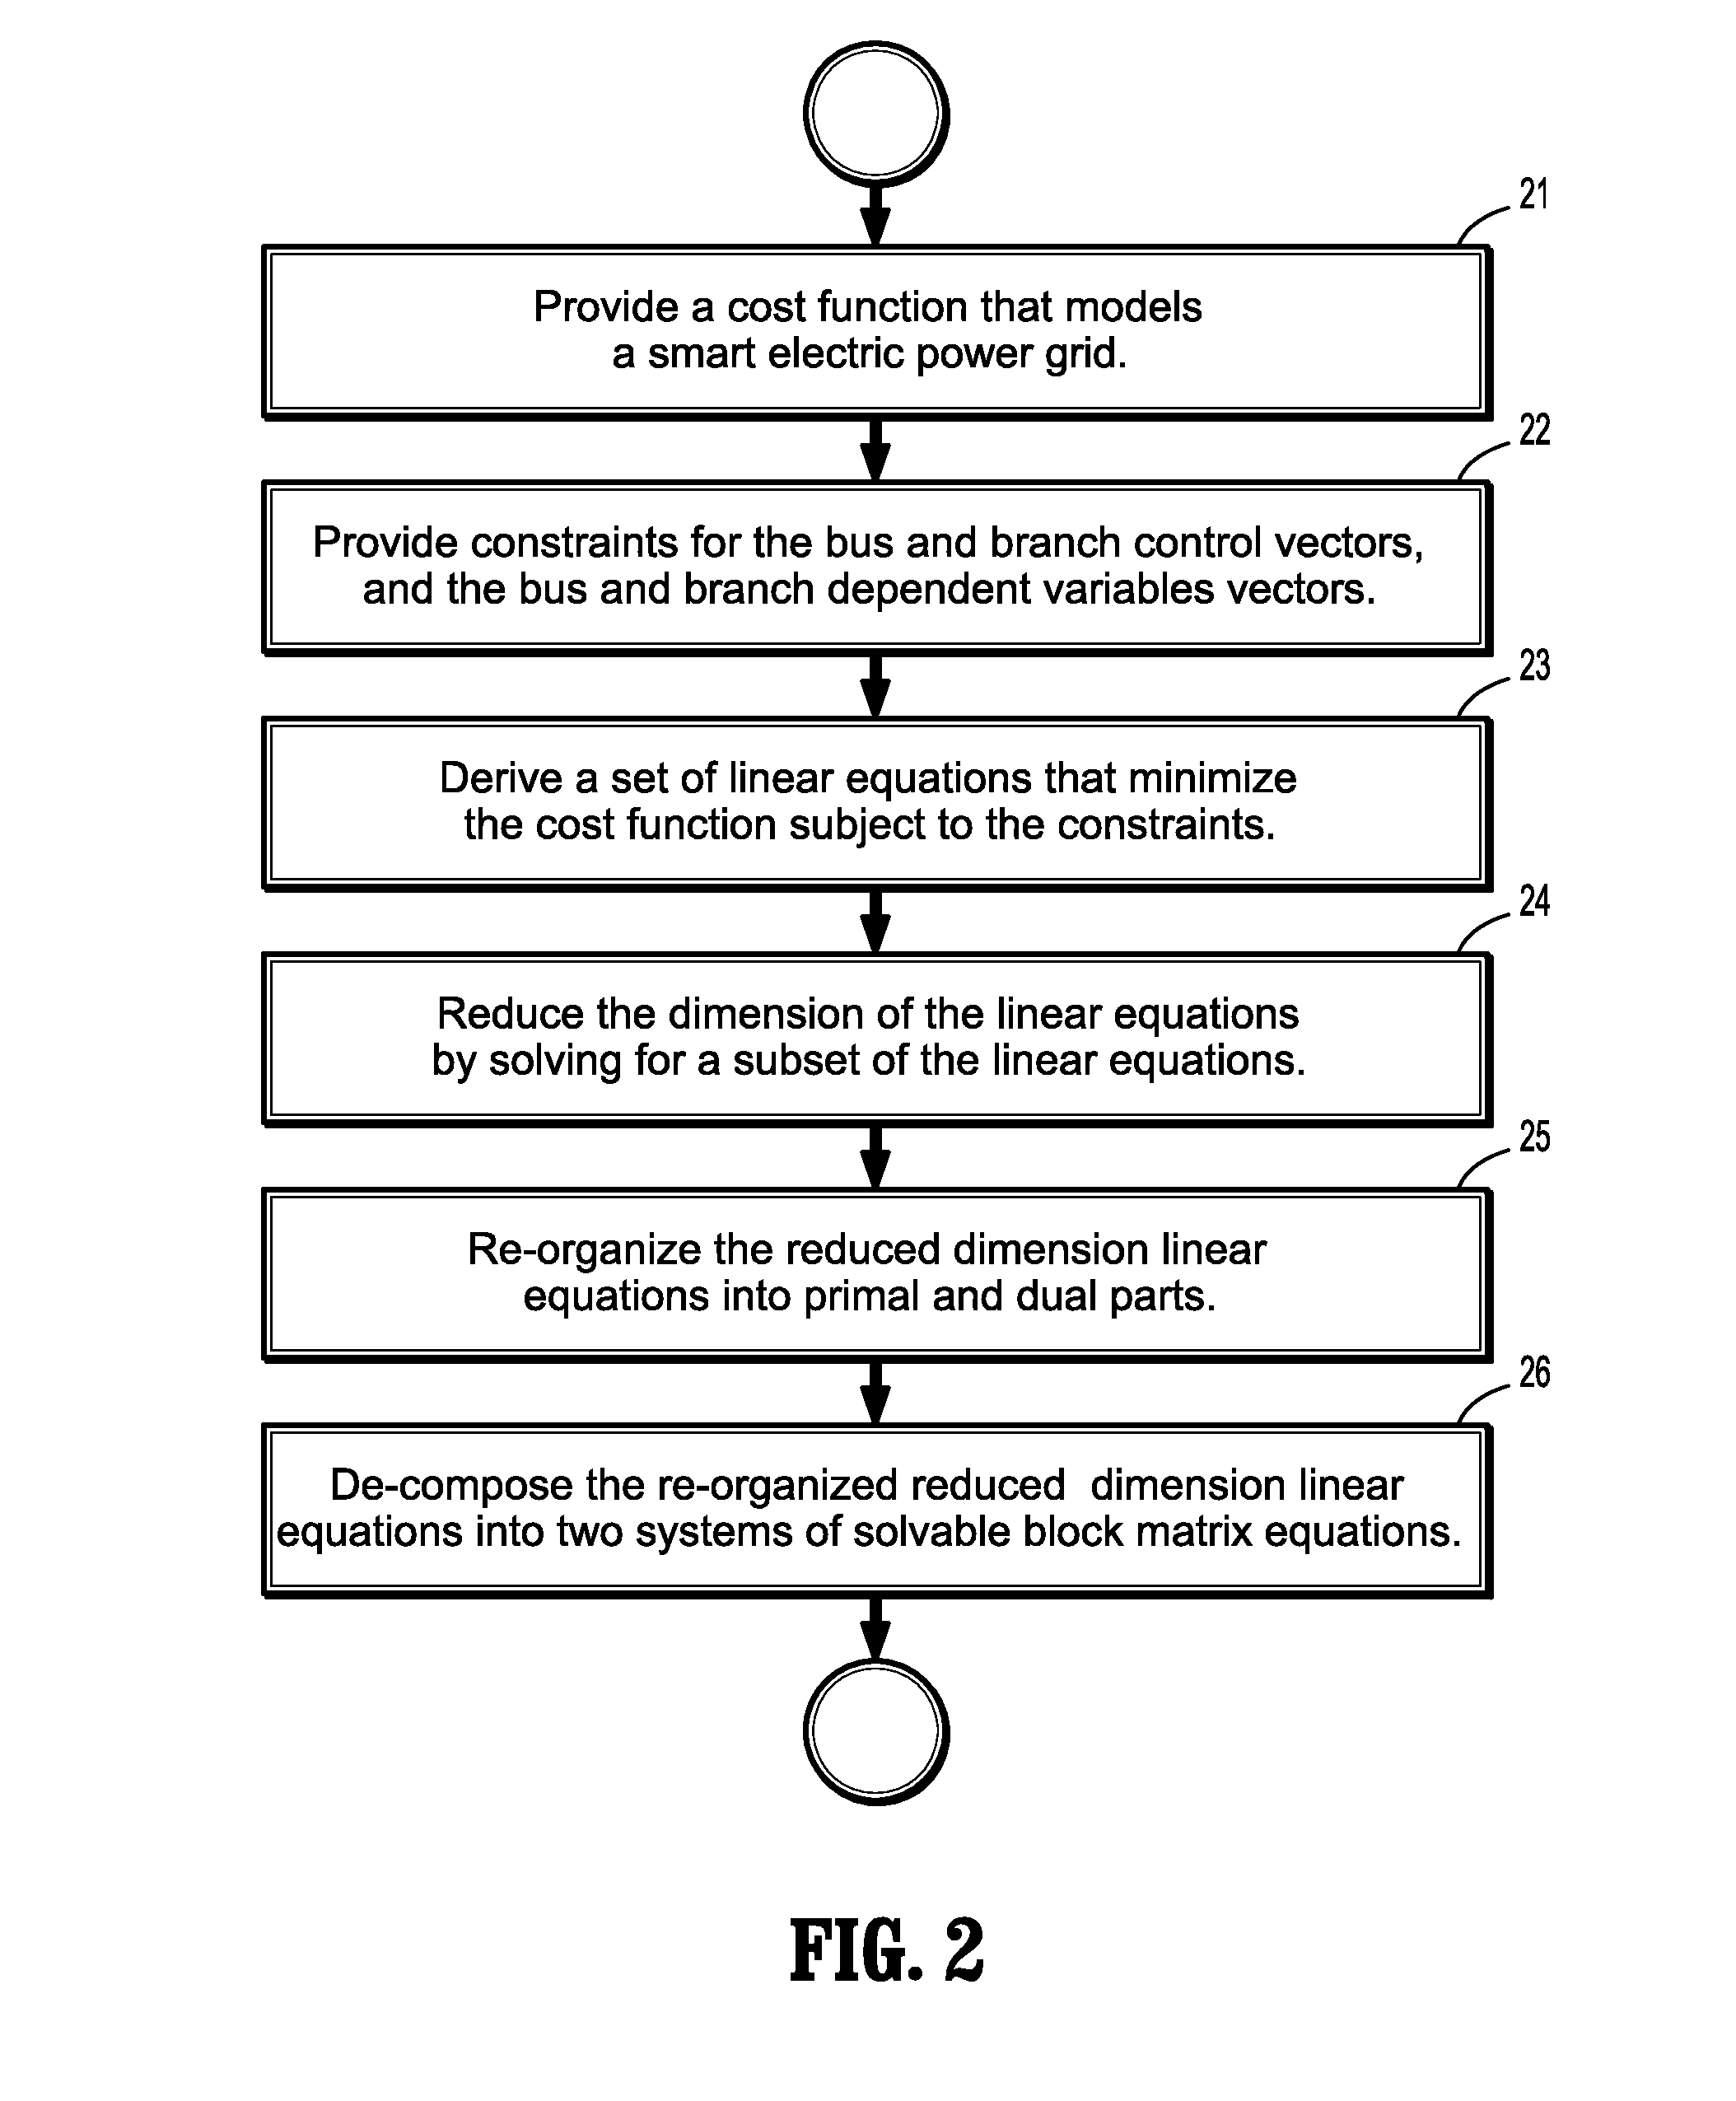 Interior point method for reformulated optimal power flow model